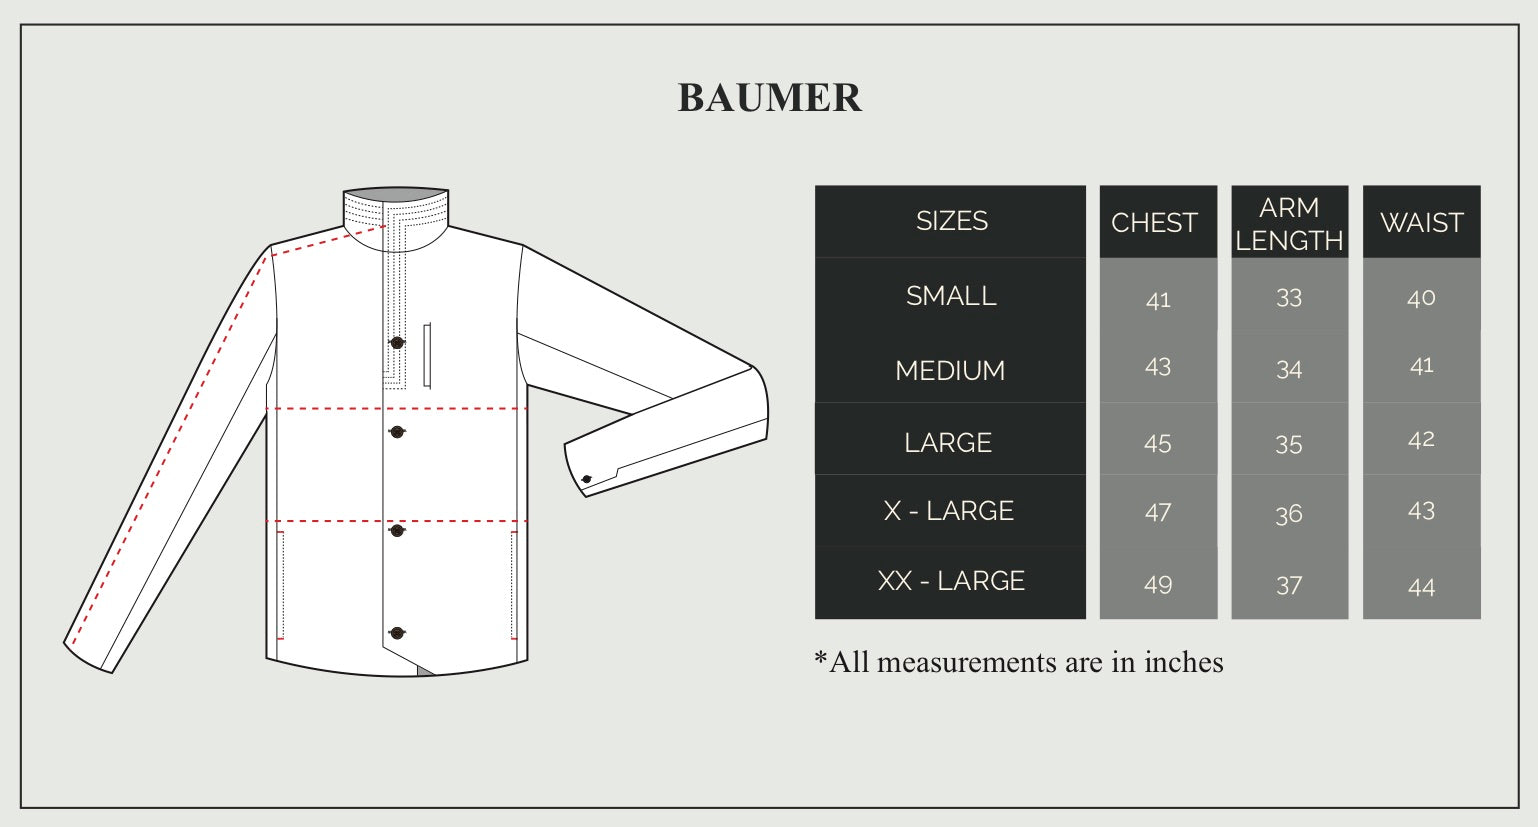 Baumer Size Guide